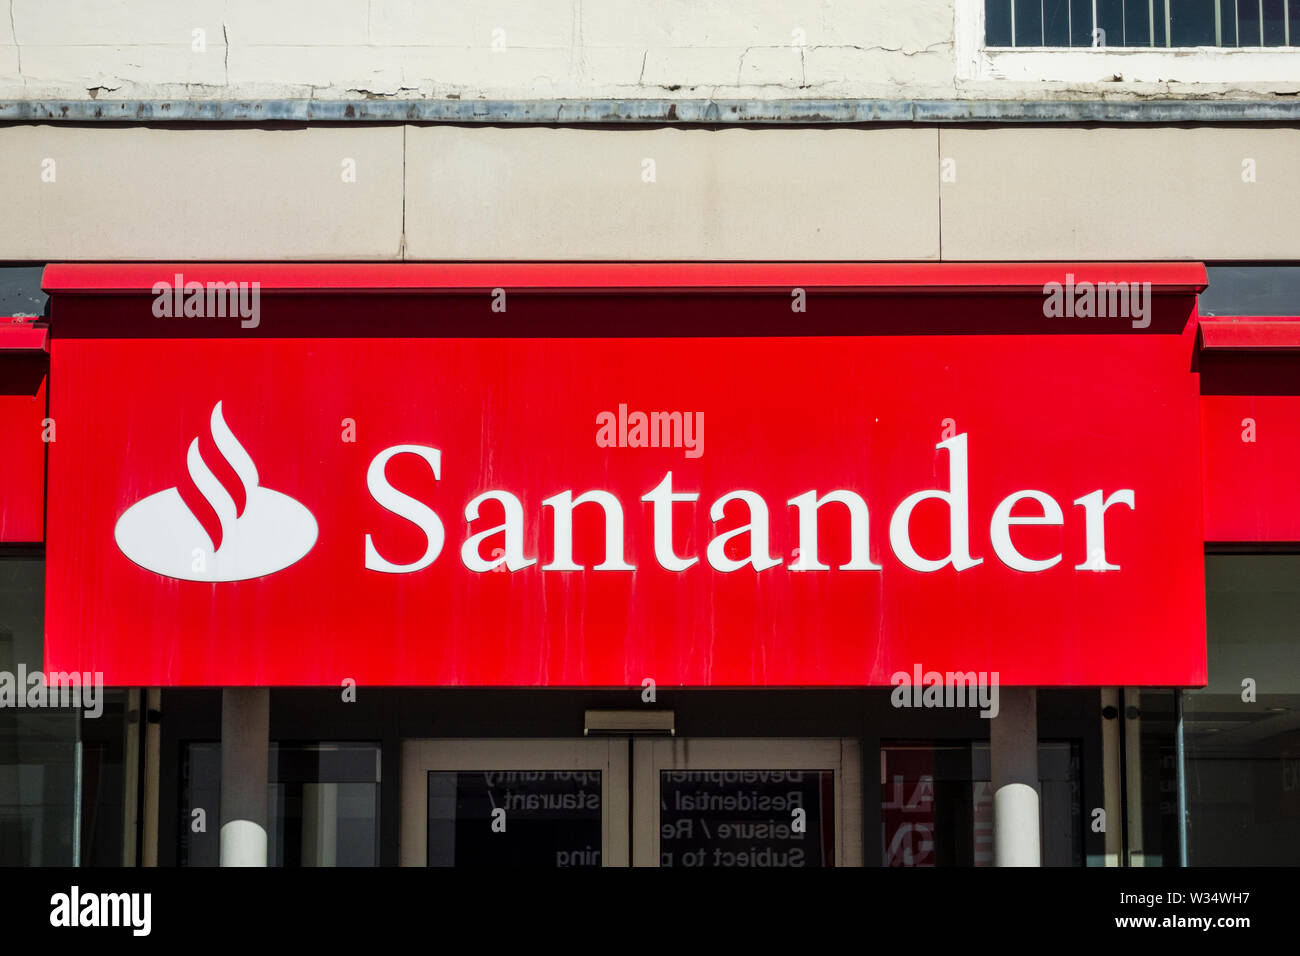 Santander High Street branch, Stourbridge, West Midlands, UK Stock Photo